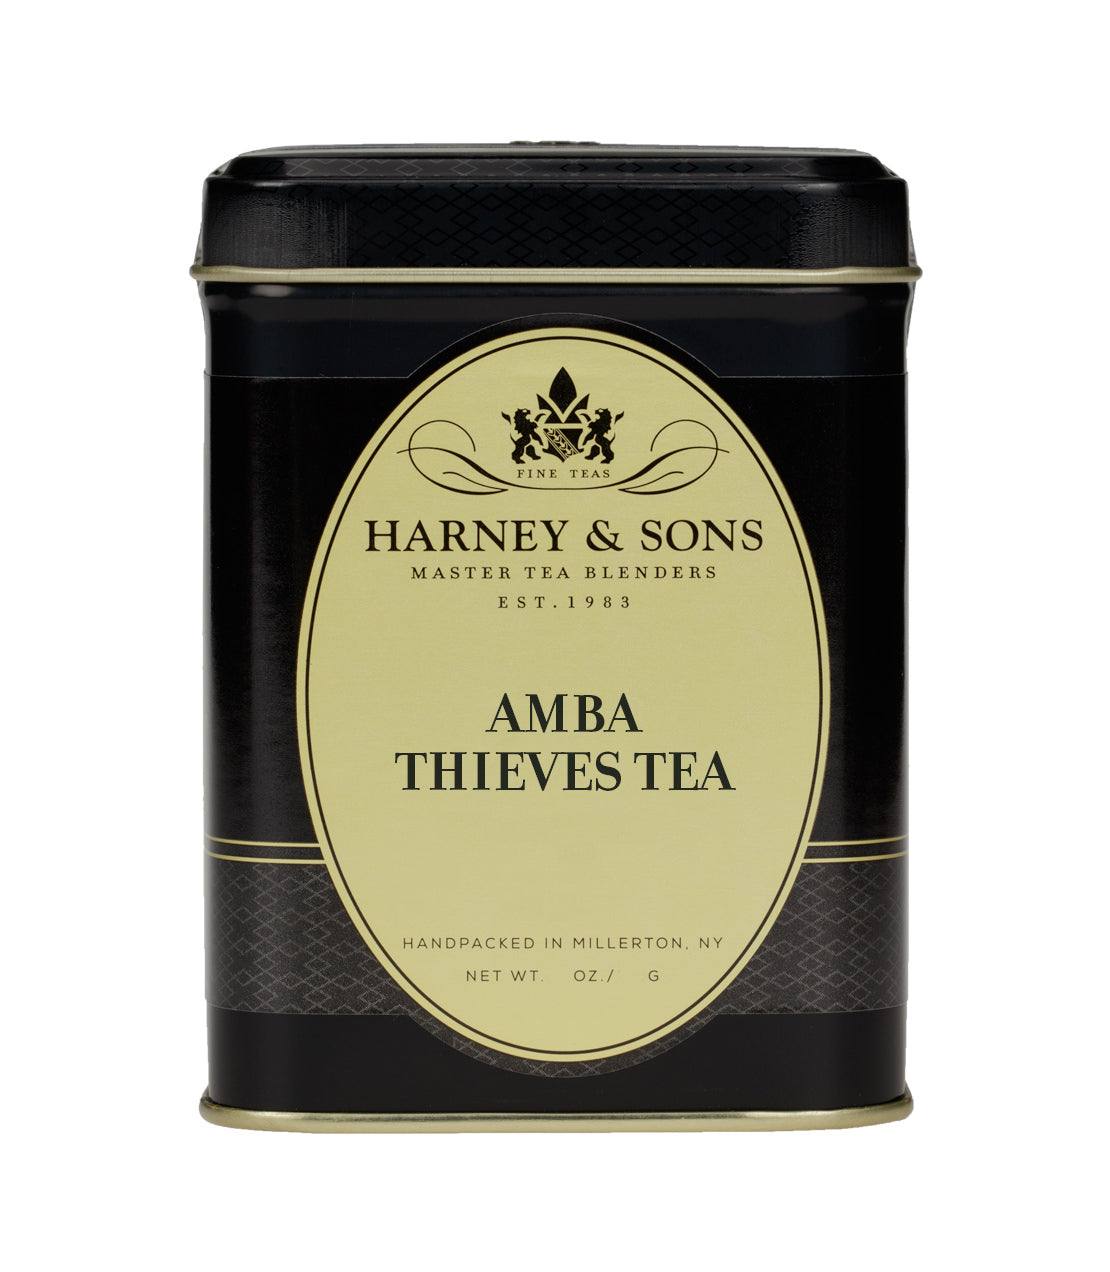 Amba Thieves Tea - Loose 3 oz. Tin - Harney & Sons Fine Teas